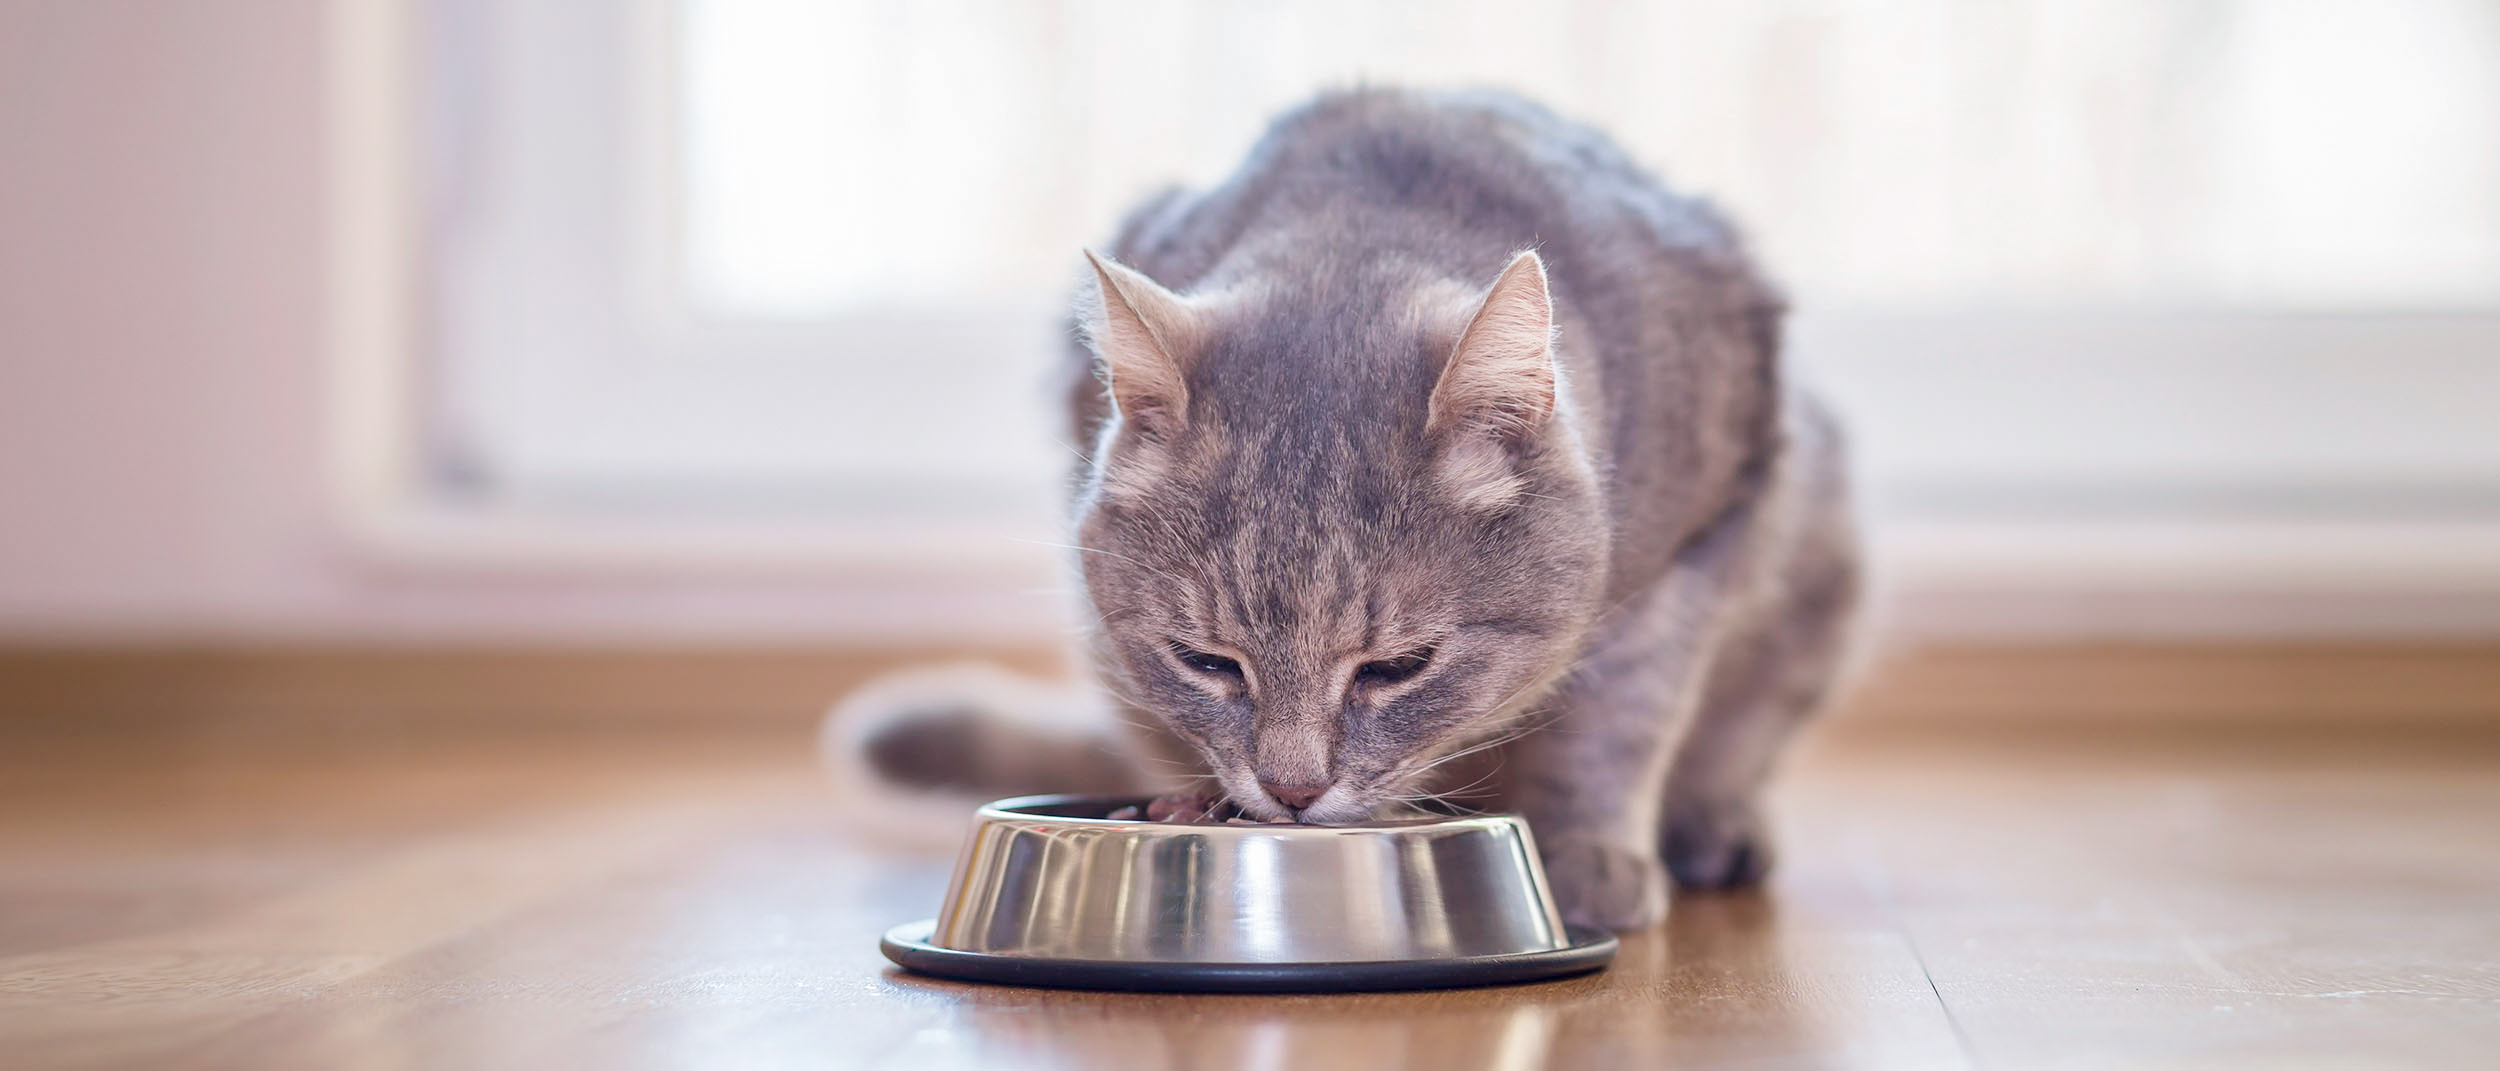 kucing dewasa sedang makan untuk mencapai berat idealnya